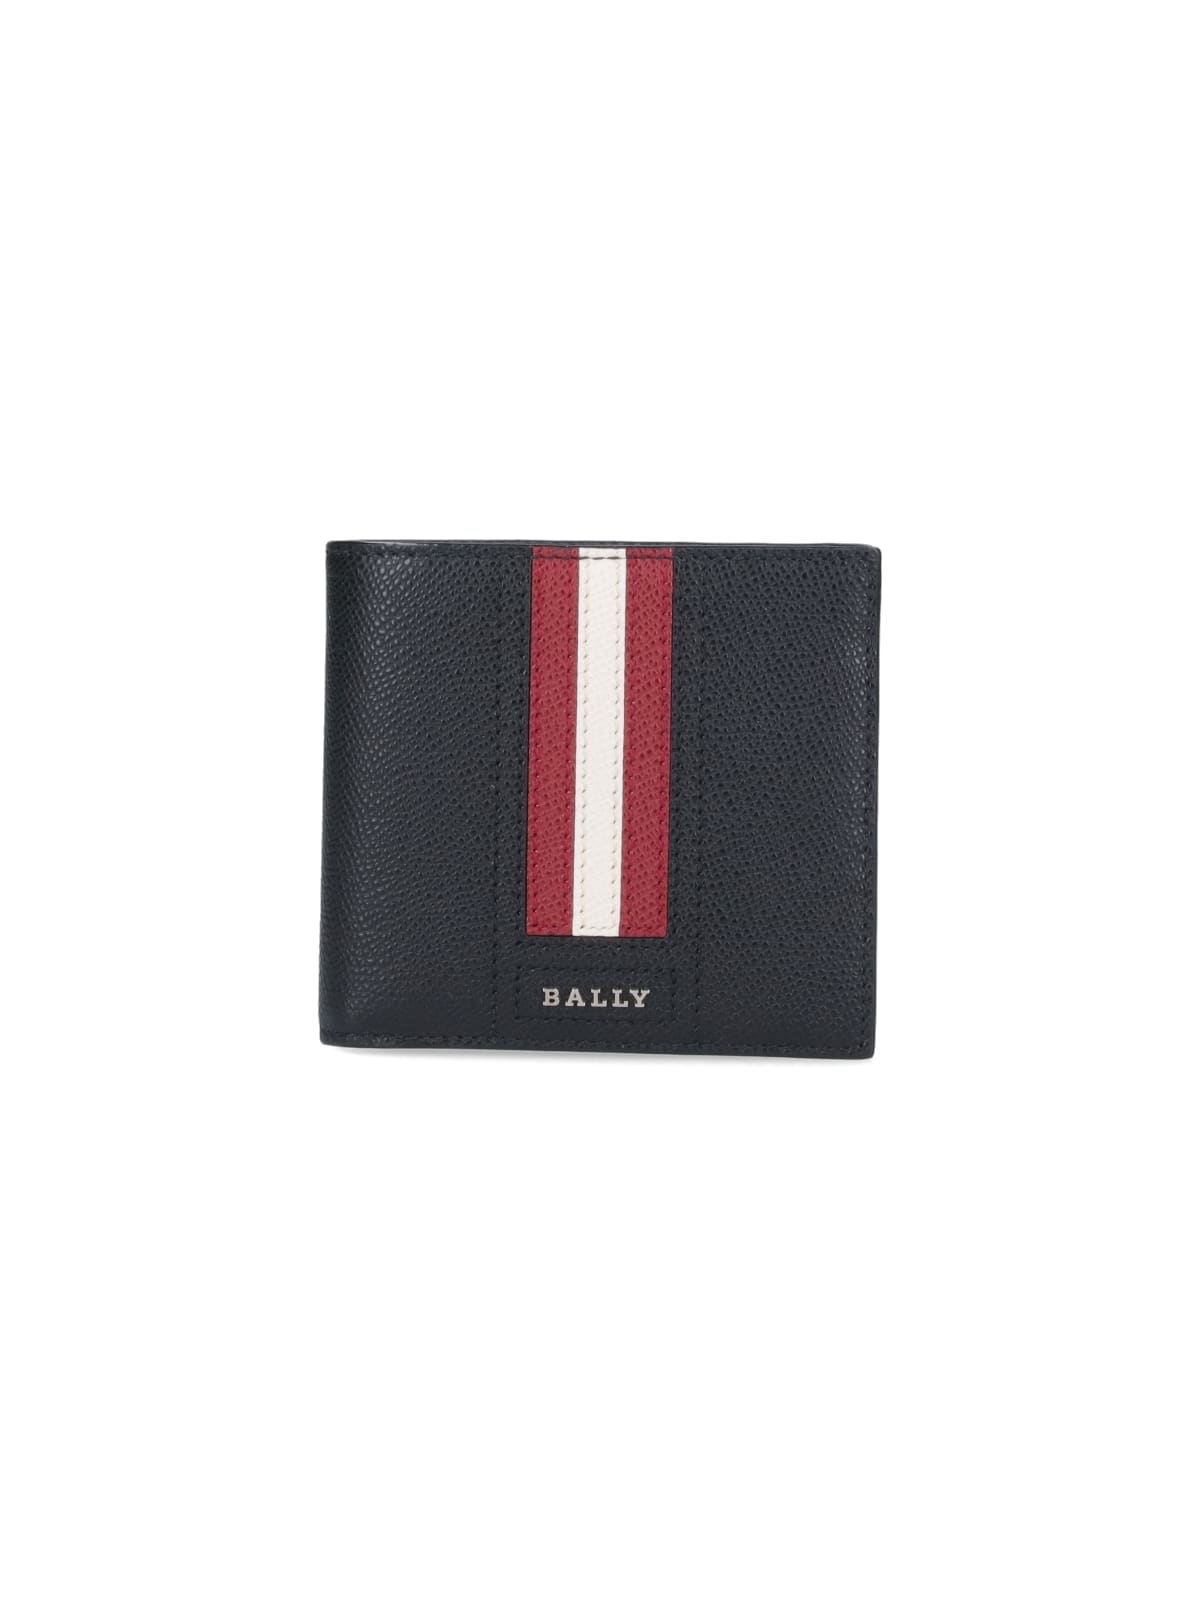 Bally Logo Leather Wallet In Black